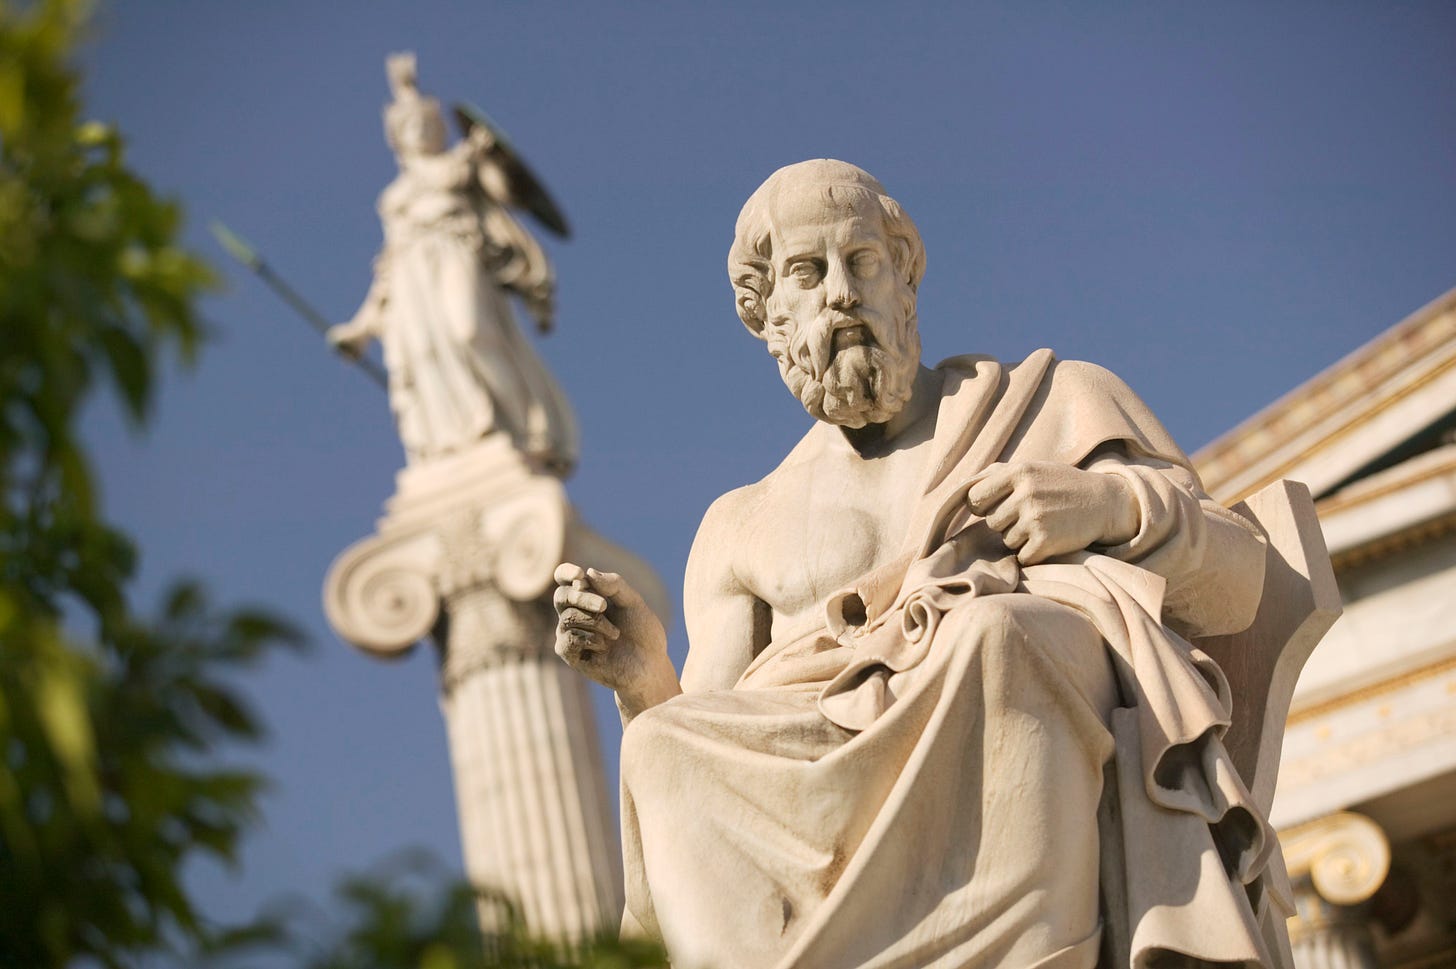 Plato's Atlantis as Told in His Socratic Dialogues